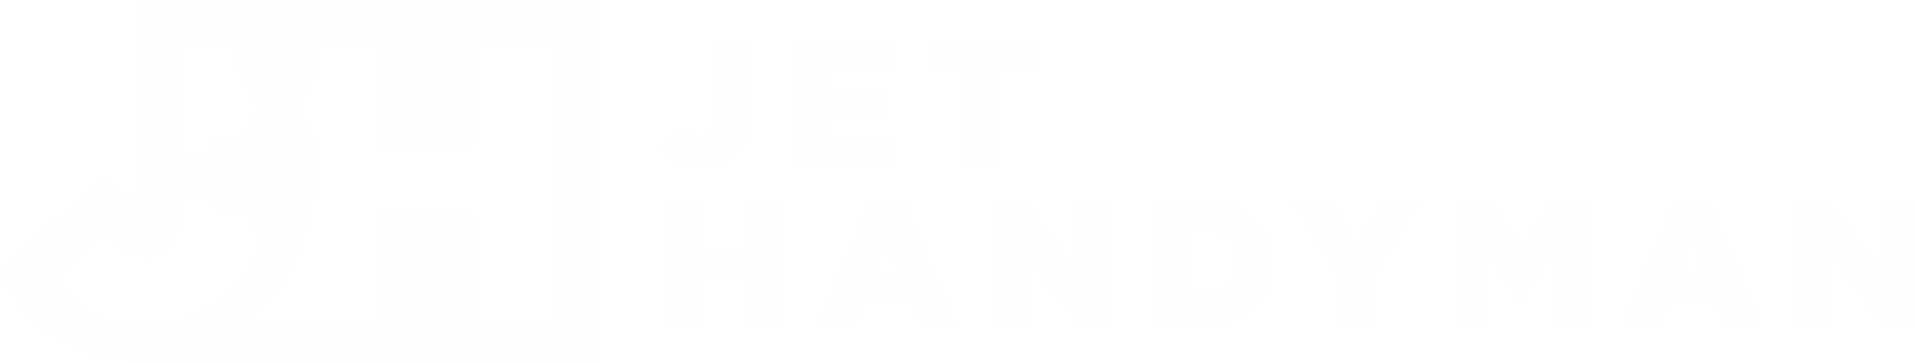 Jet Handyman Logo